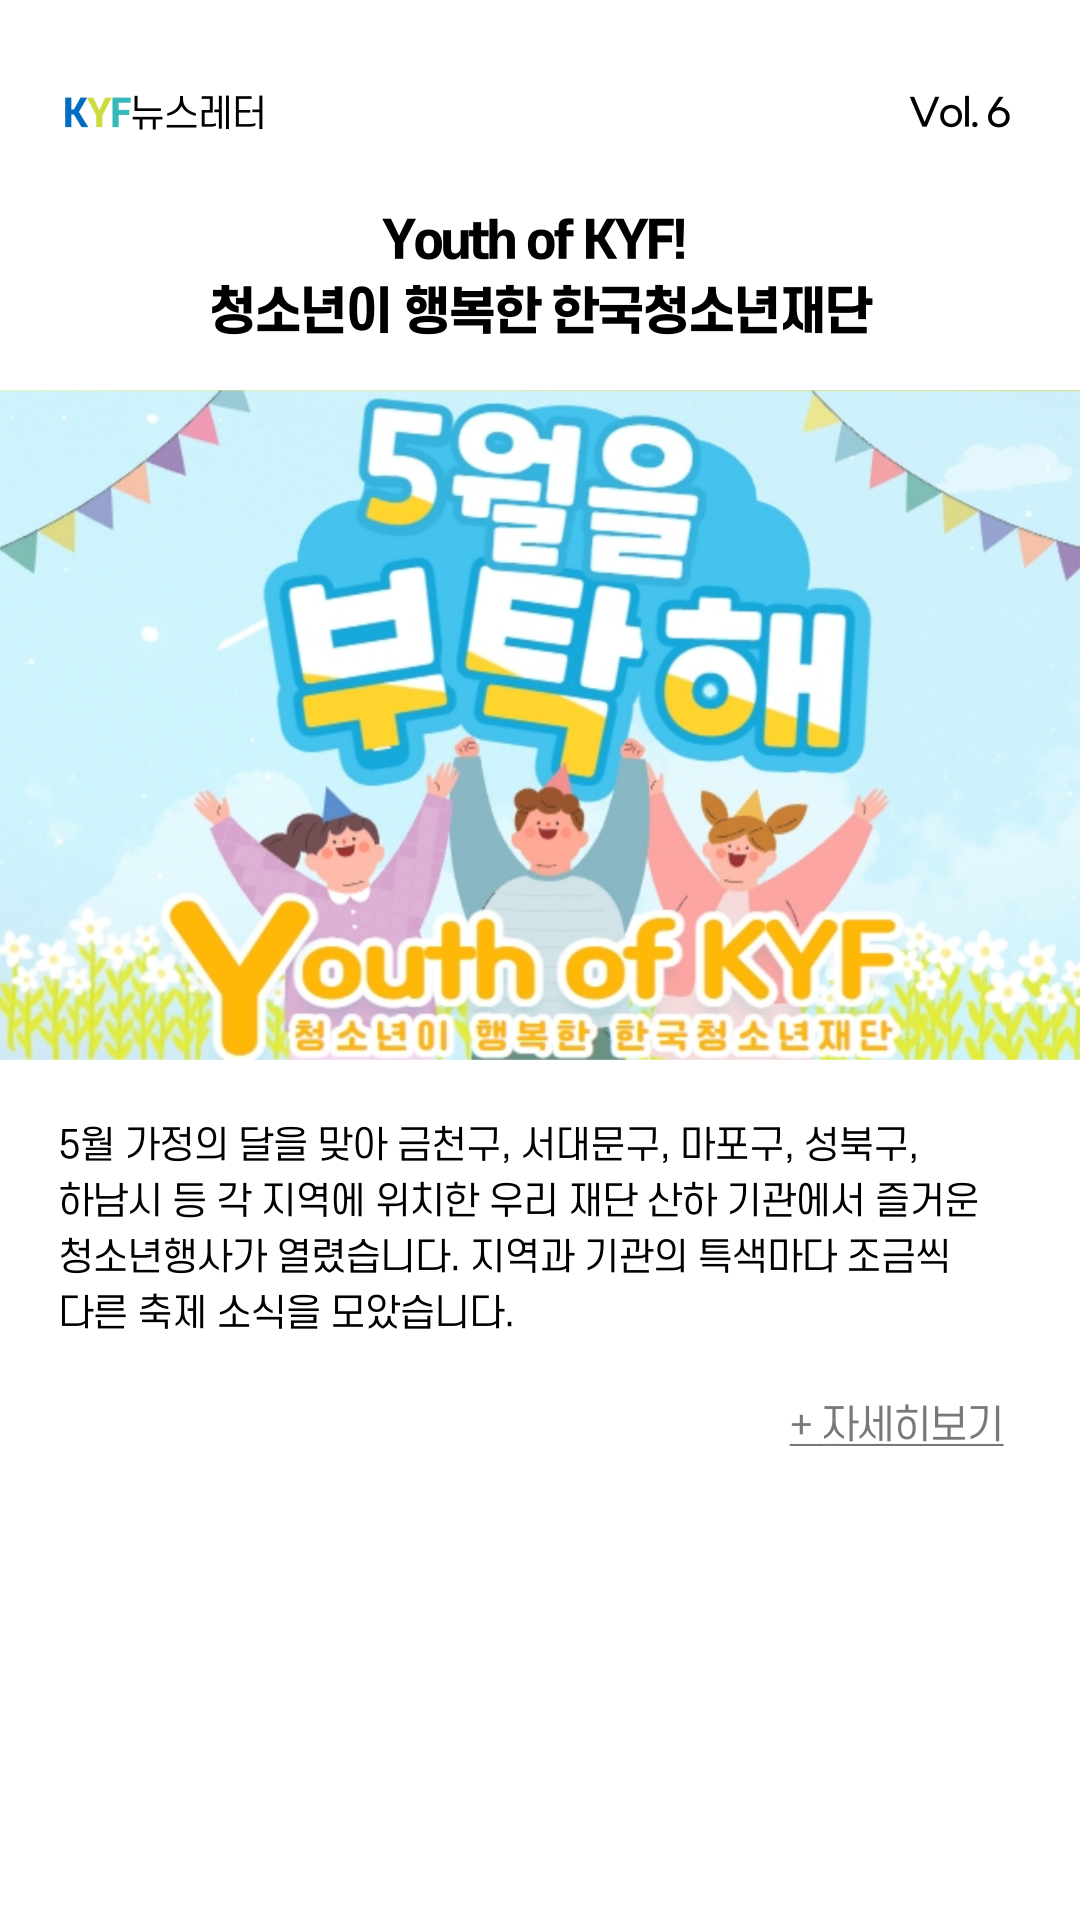 Youth of KYF! 청소년이 행복한 한국청소년재단  5월 가정의 달을 맞아 금천구, 서대문구, 마포구, 성북구, 하남시 등 각 지역에 위치한 우리 재단 산하 기관에서 즐거운 청소년행사가 열렸습니다. 지역과 기관의 특색마다 조금씩 다른 축제 소식을 모았습니다.